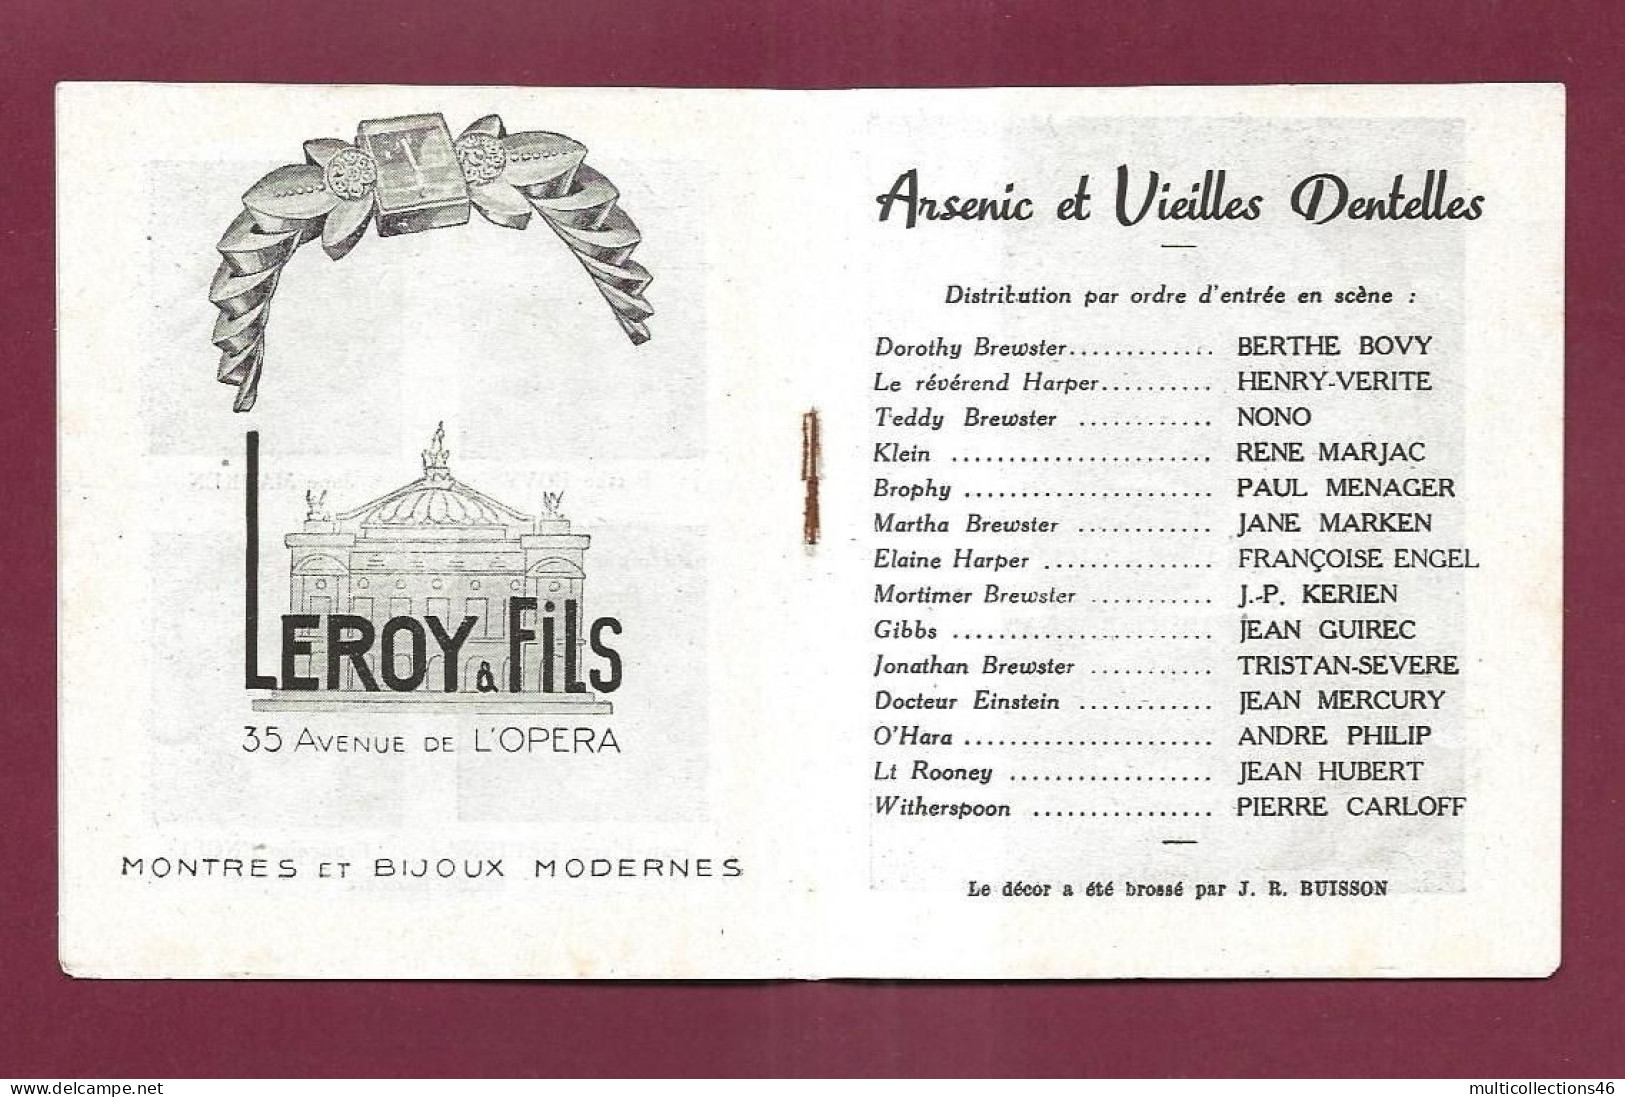 150524 - PROGRAMME THEATRE MARIGNY 1945 46 - Arsenic Et Vieilles Dentelles - Bovy Nono Marjac Vérité - Programs